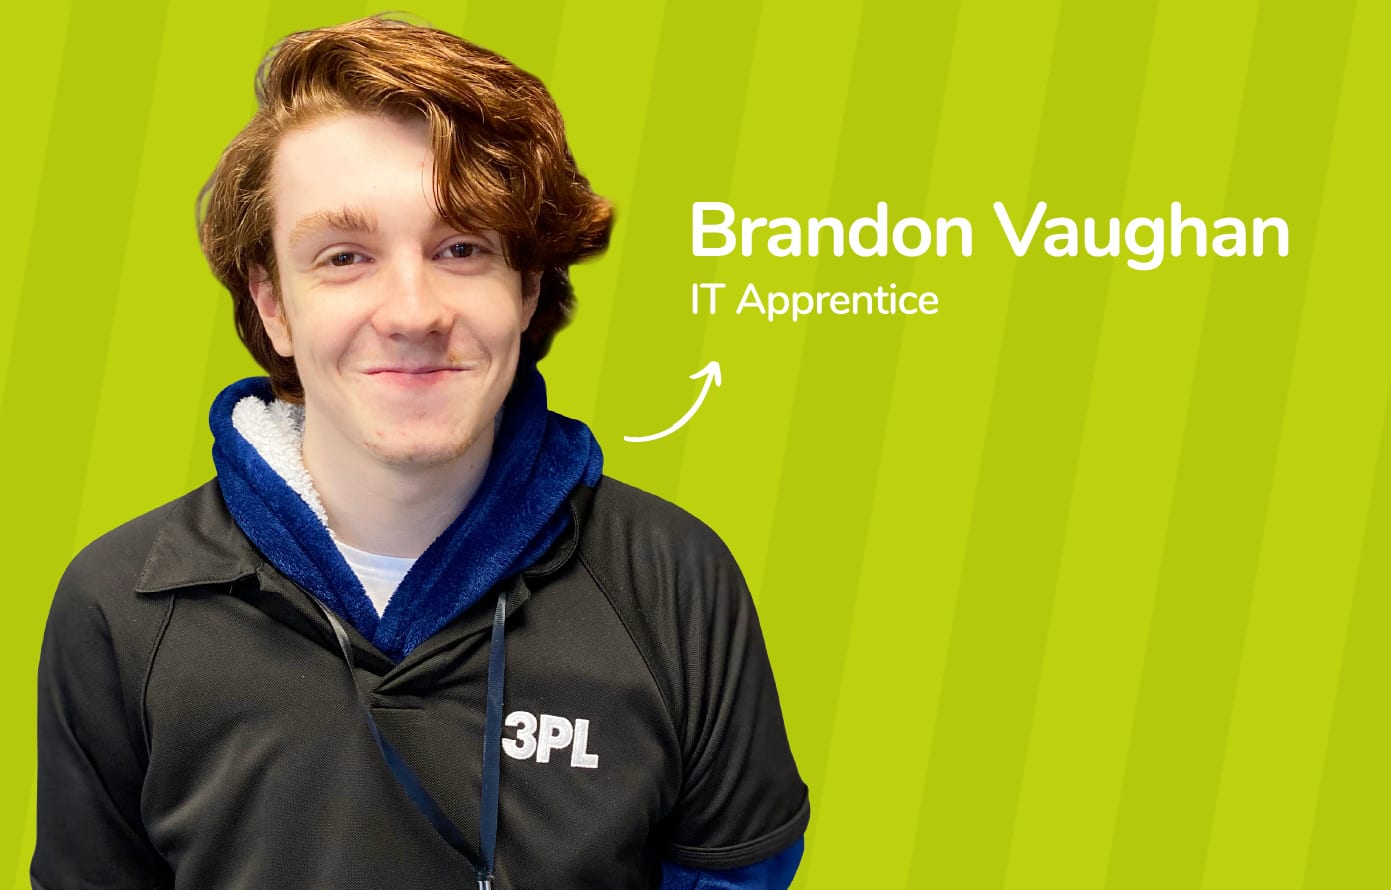 Inside 3PL: Meet Brandon Vaughan, IT Apprentice